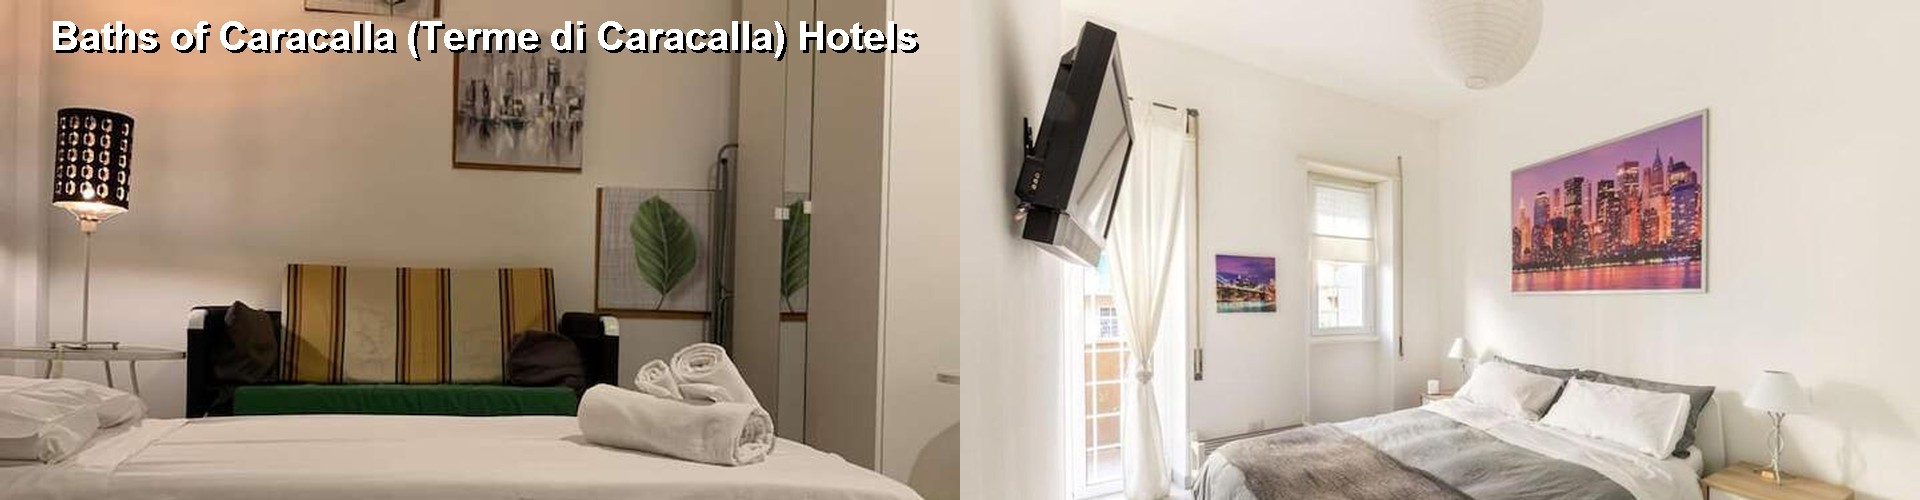 5 Best Hotels near Baths of Caracalla (Terme di Caracalla)